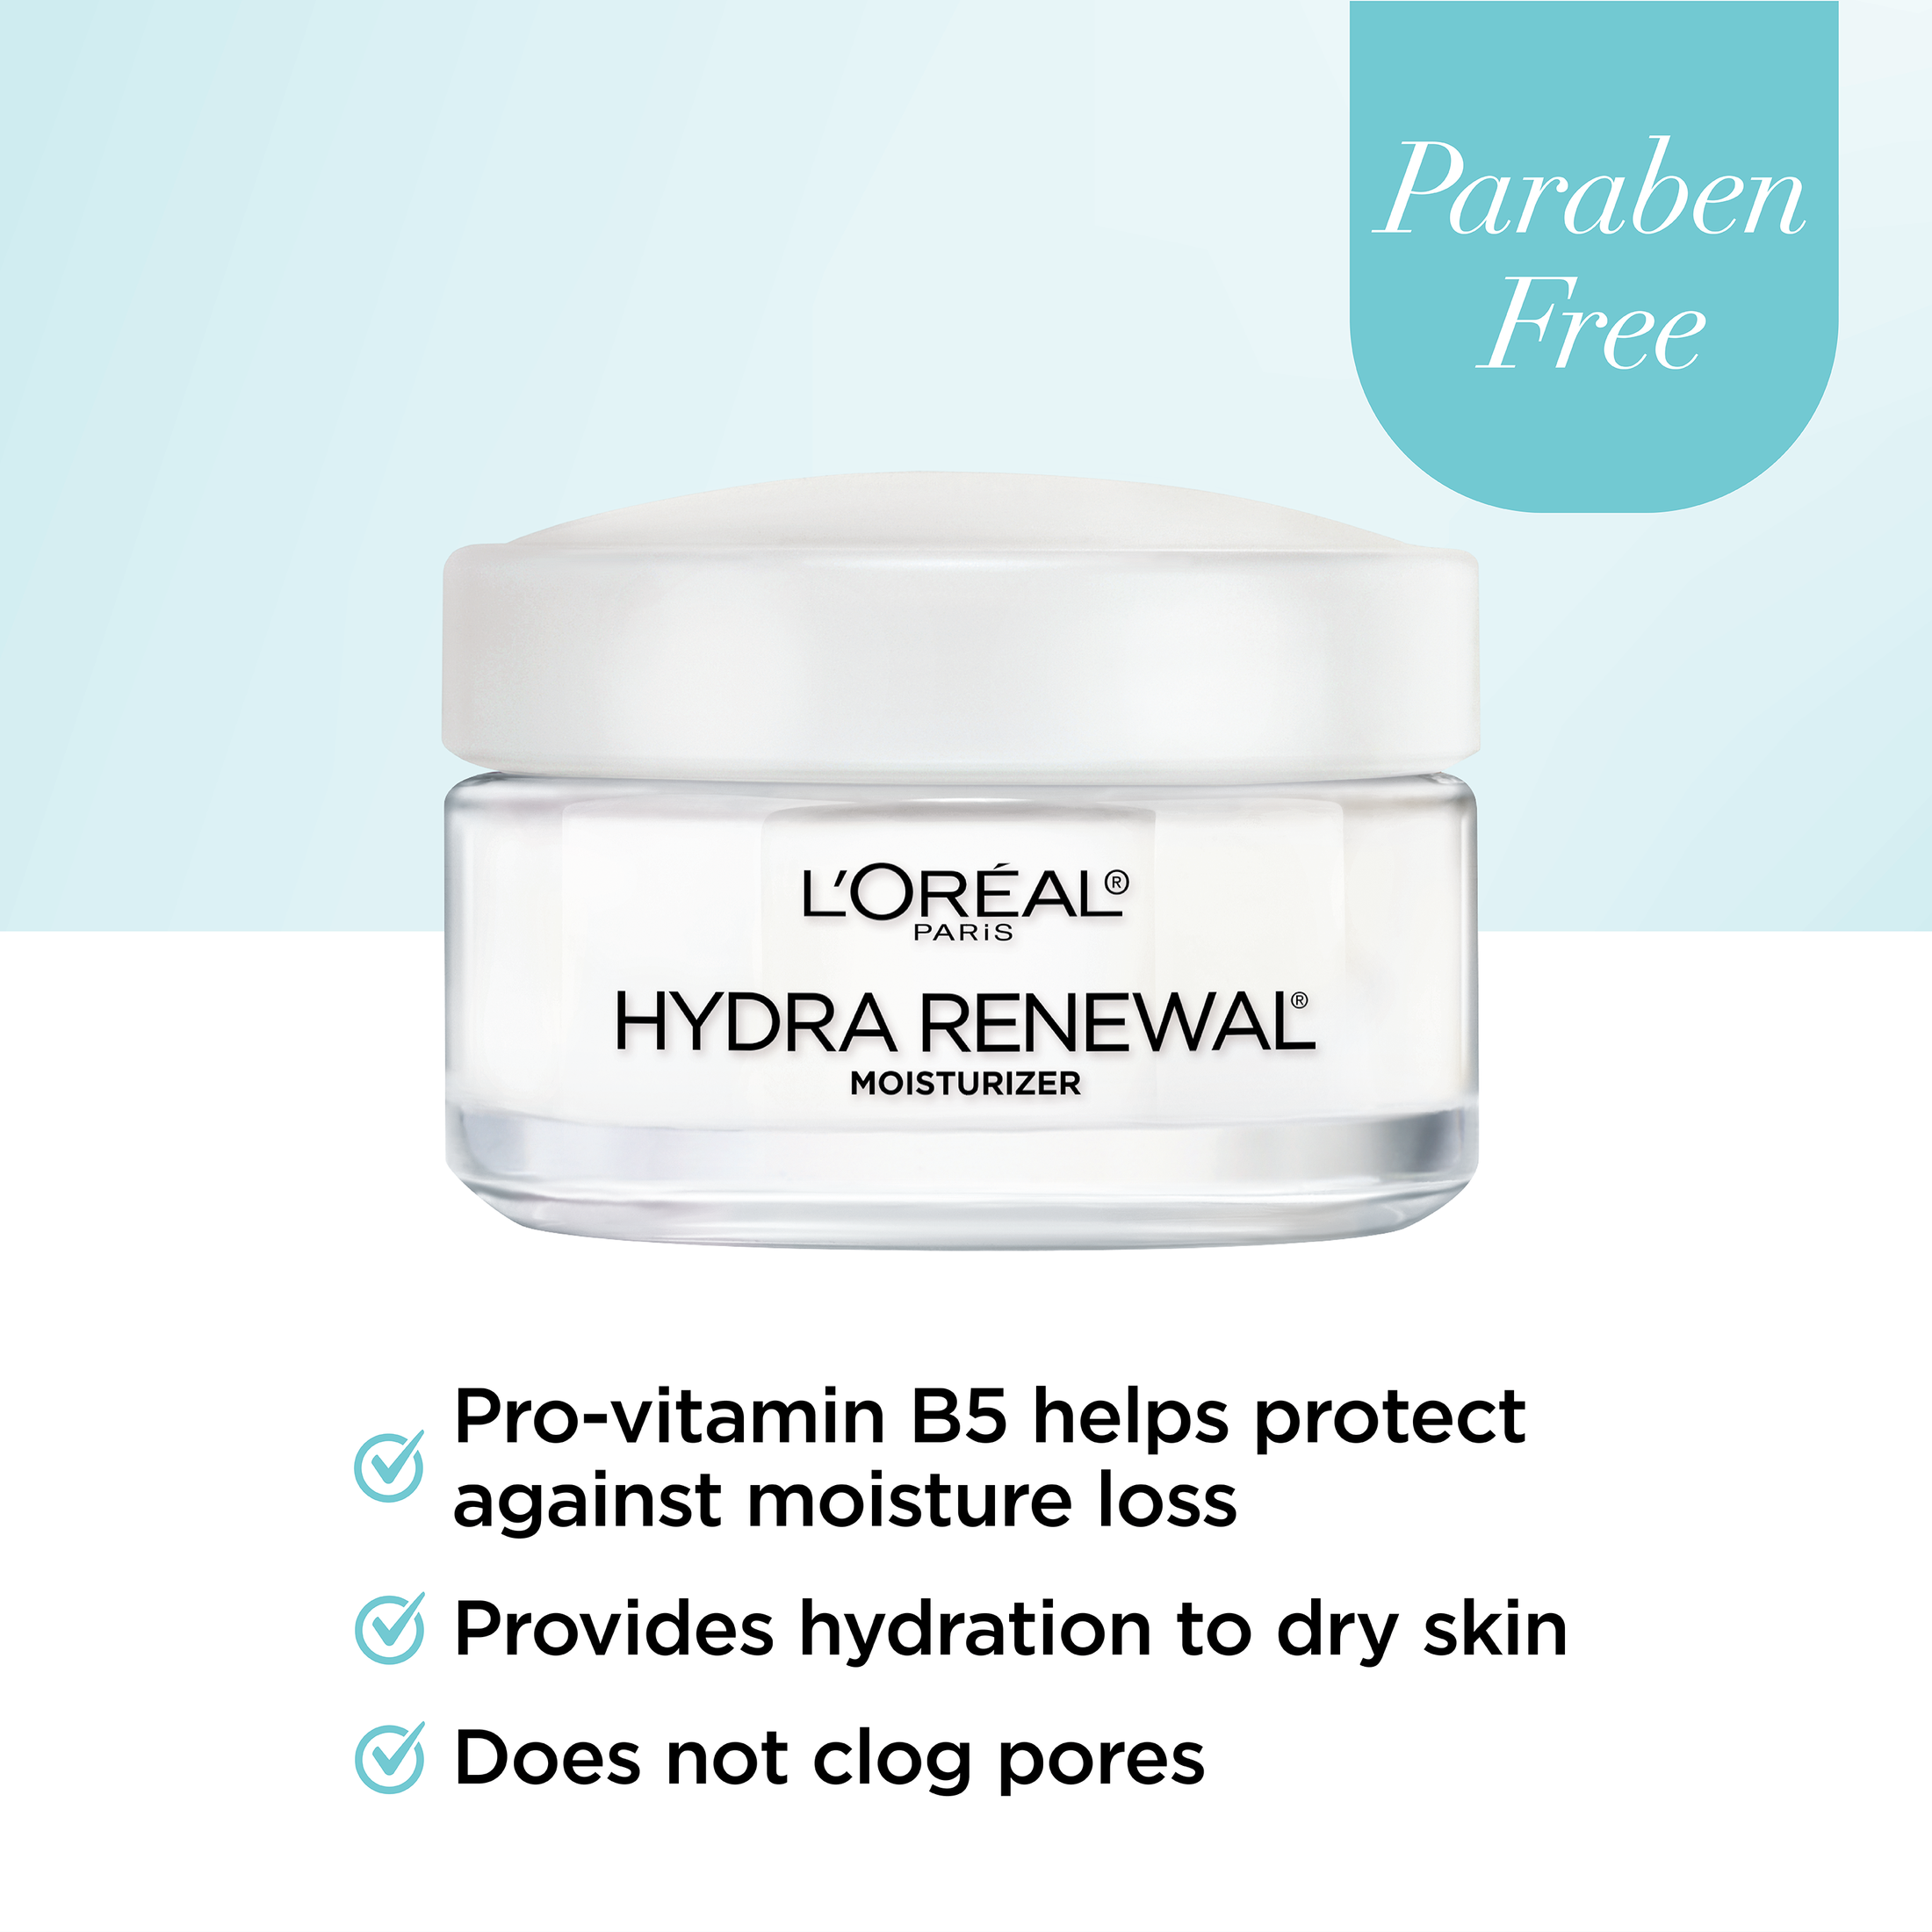 L'Oreal Paris Dermo Expertise Hydra Renewal Moisture Cream, 1.7 oz - image 5 of 7